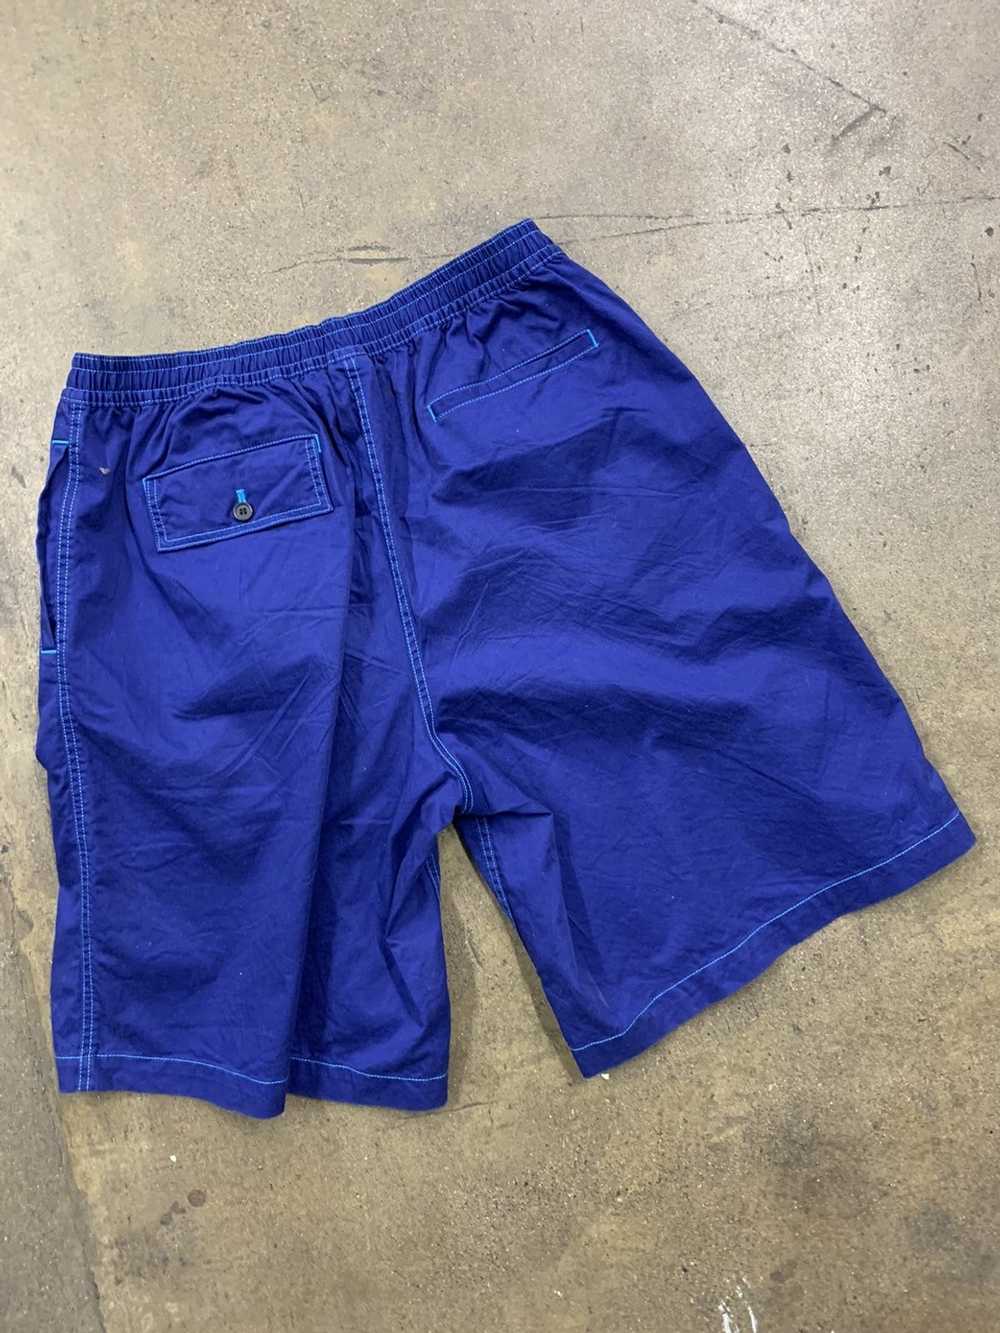 Marni × Streetwear Marni Blue Canvas Shorts - image 6